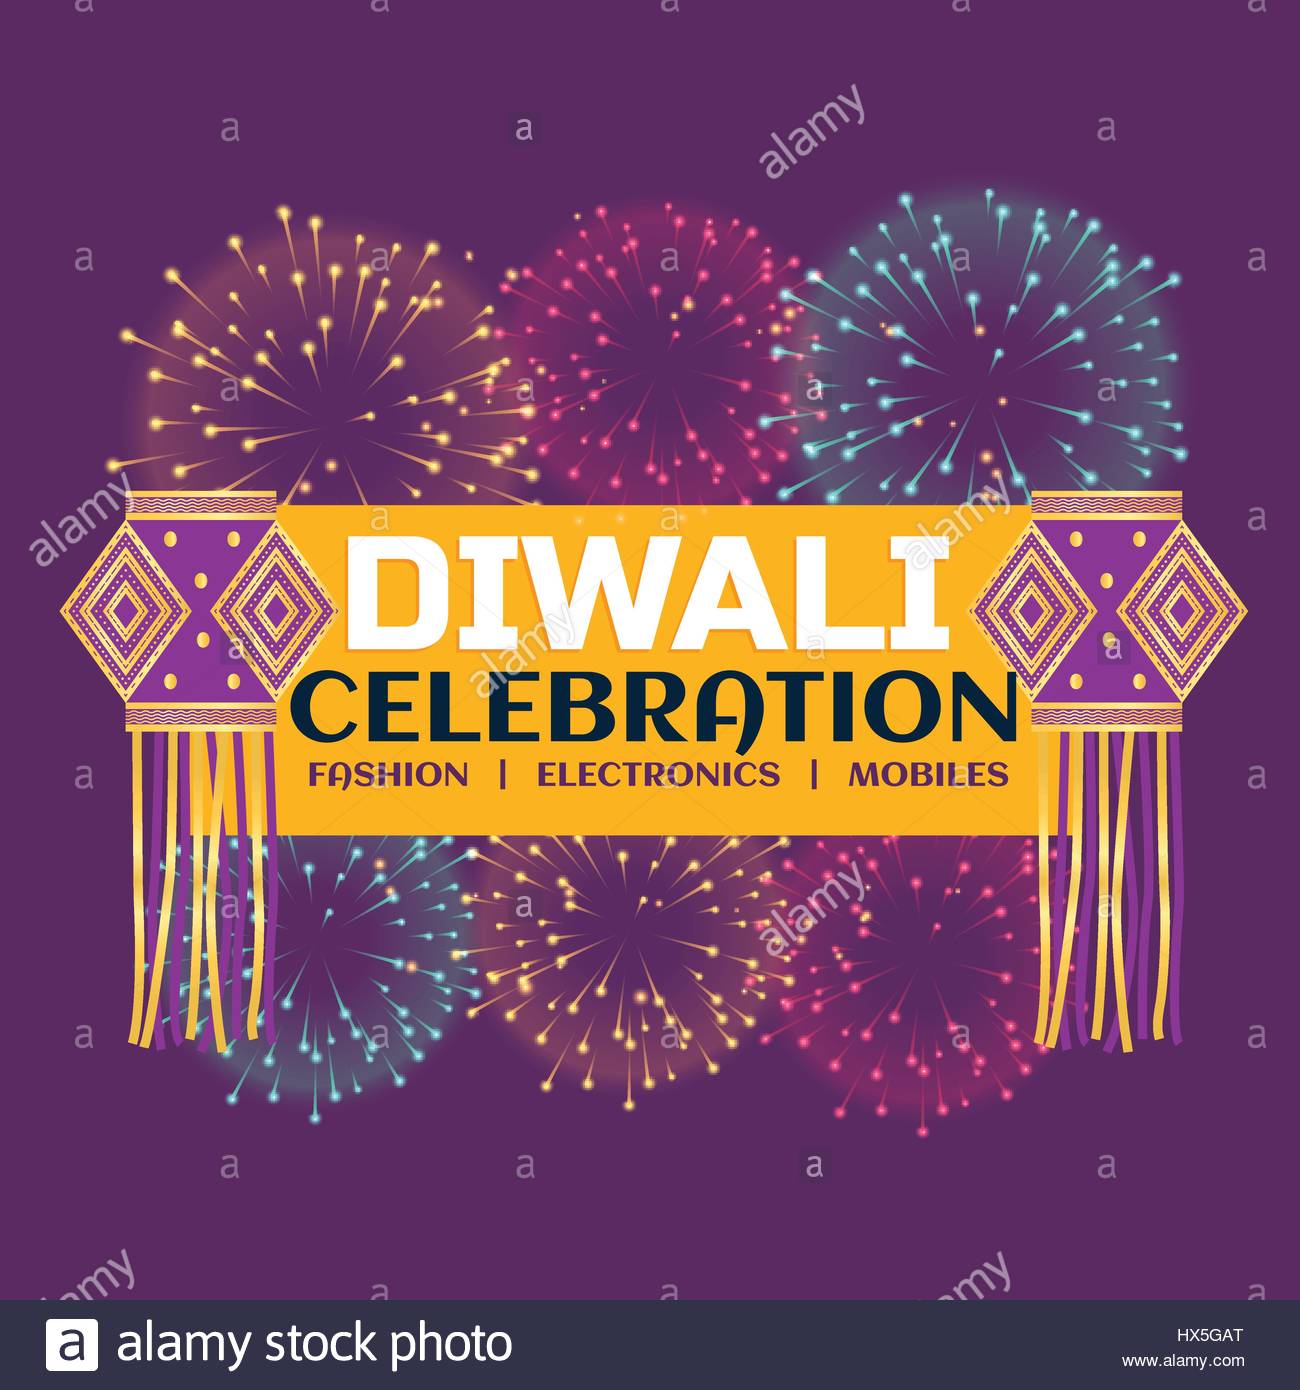 Diwali Festival Celebration Banner With Fireworks And Hanging